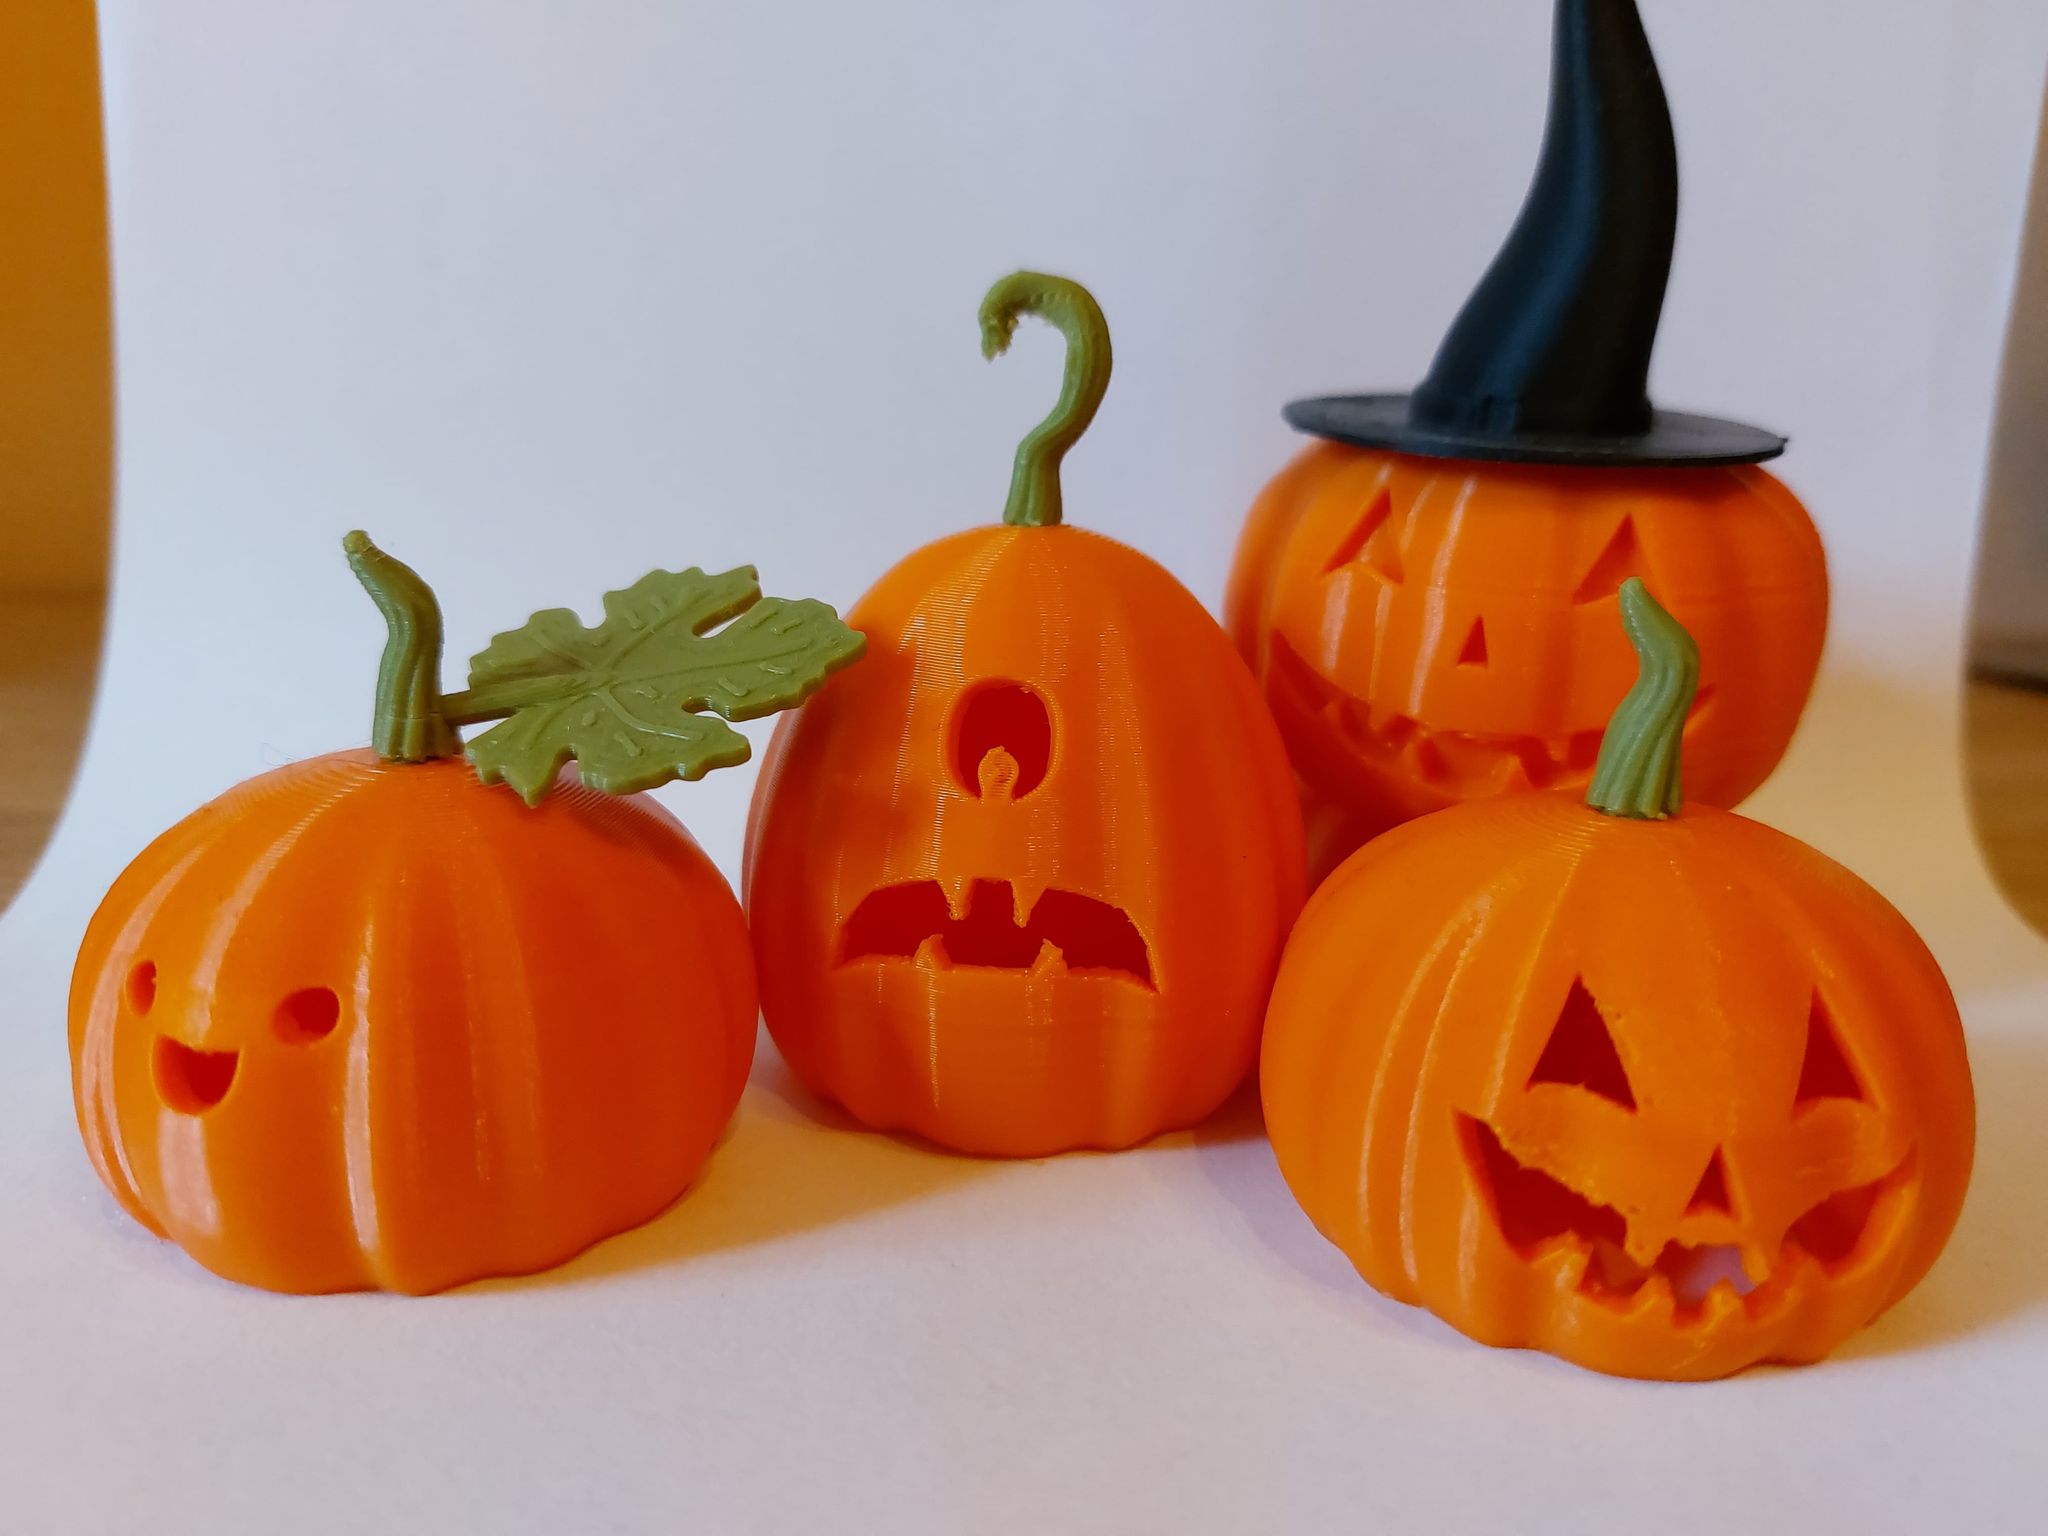 One Eye Spooky Halloween Pumpkin/ Jack O'Lantern by Macroglossum ...